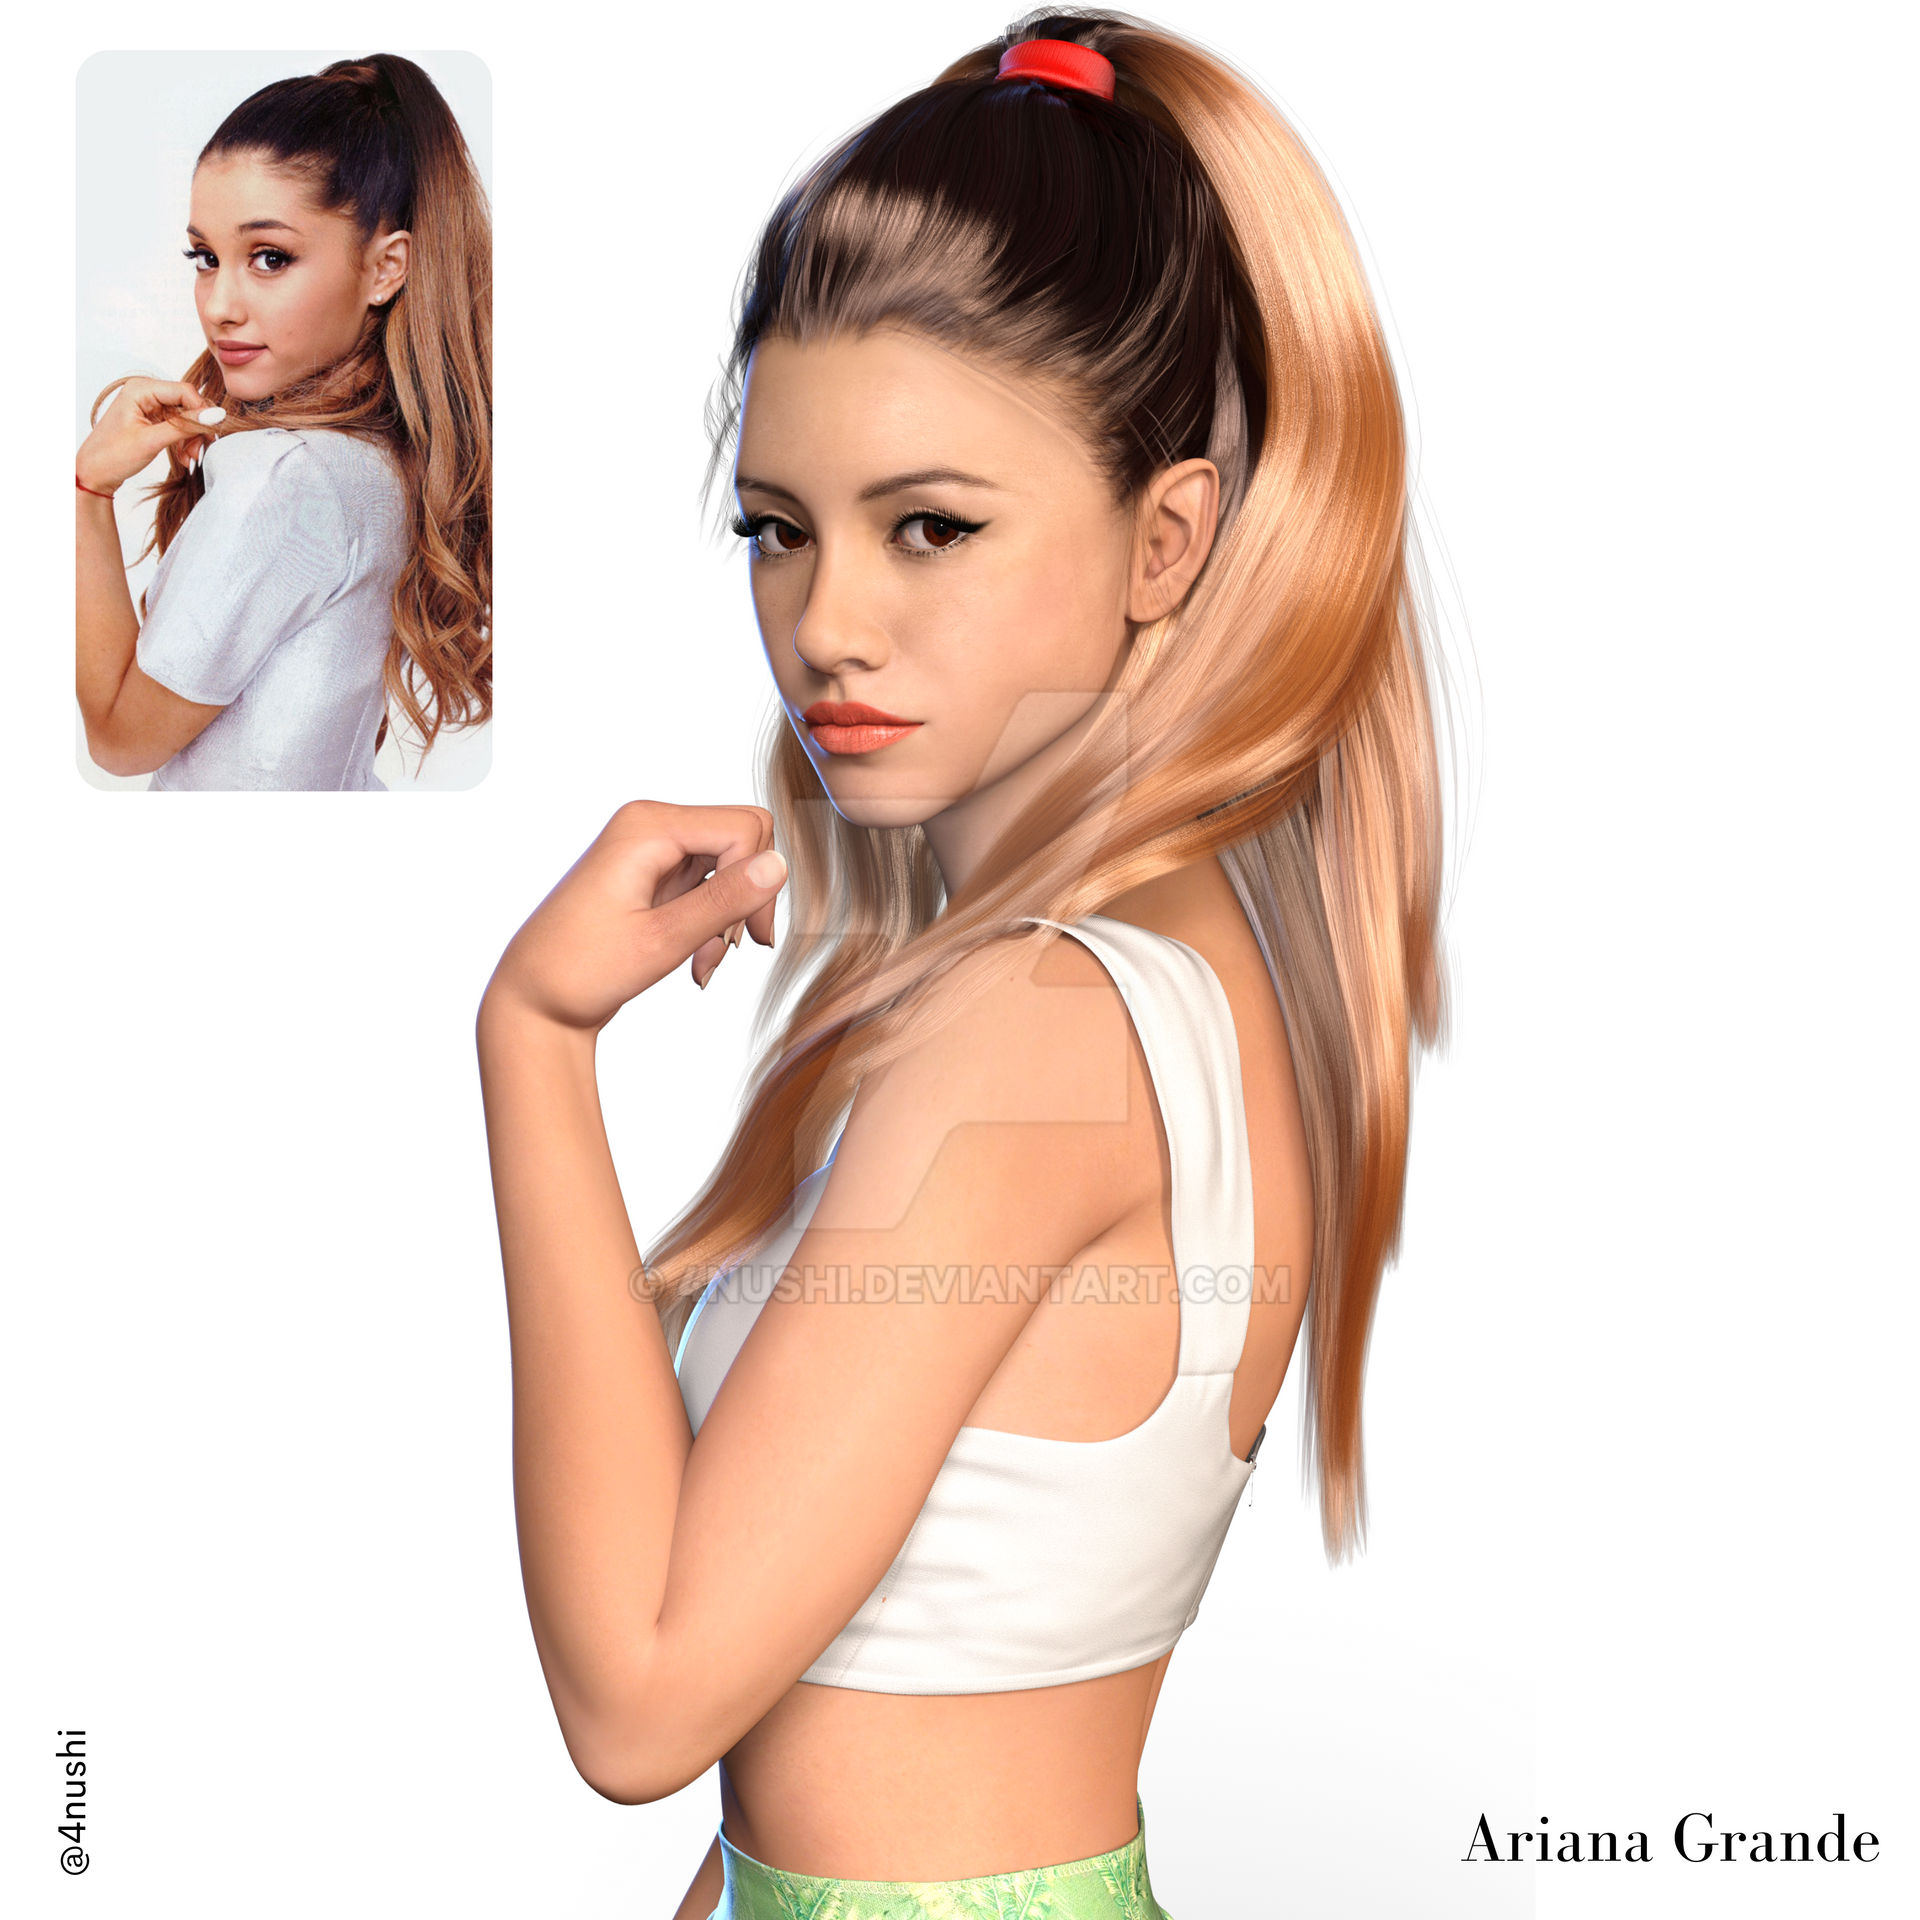 Ariana Grande : 3D Model by 4nushi on DeviantArt